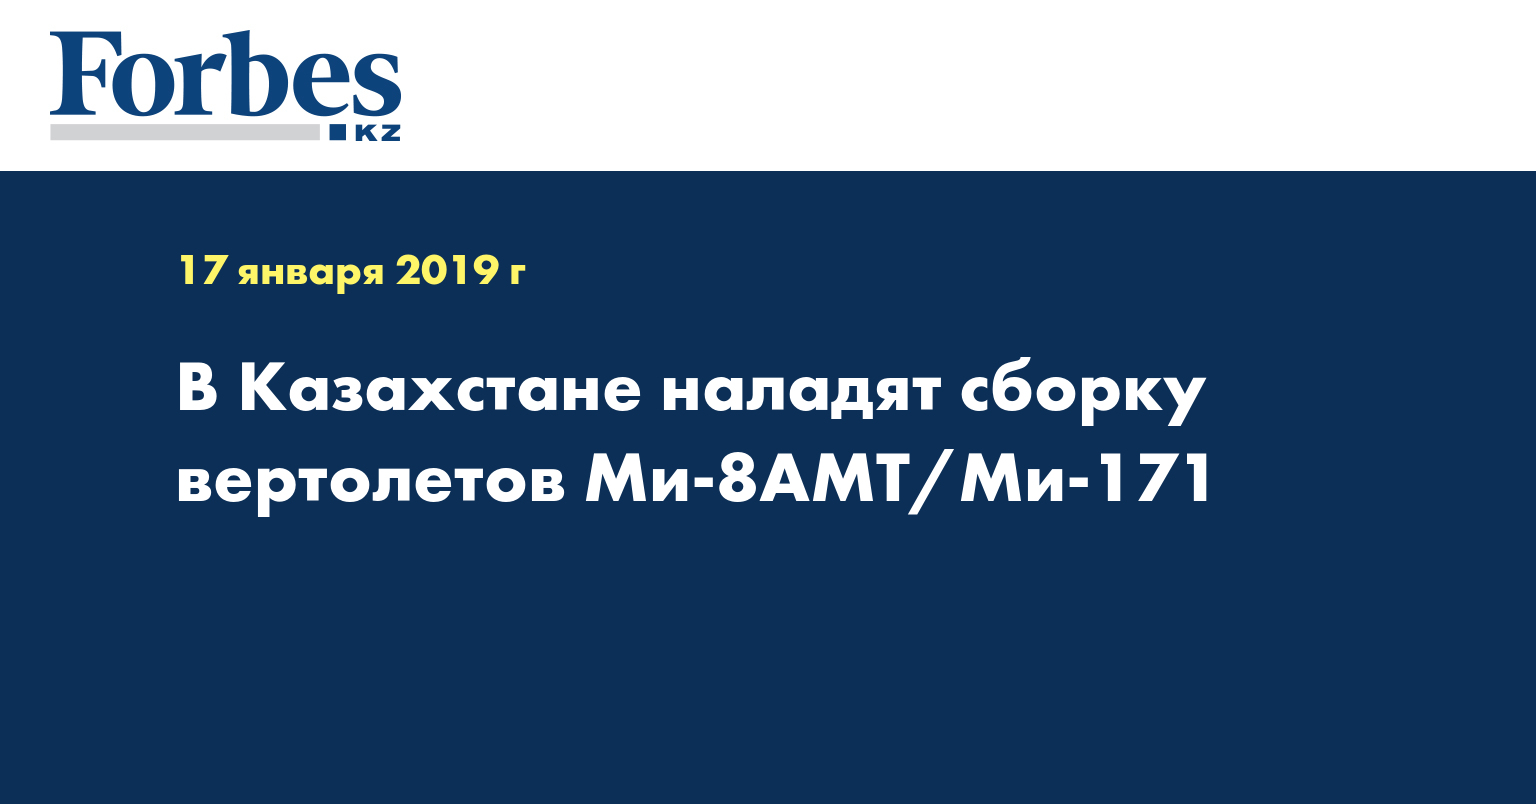 В Казахстане наладят сборку вертолетов Ми-8АМТ/Ми-171